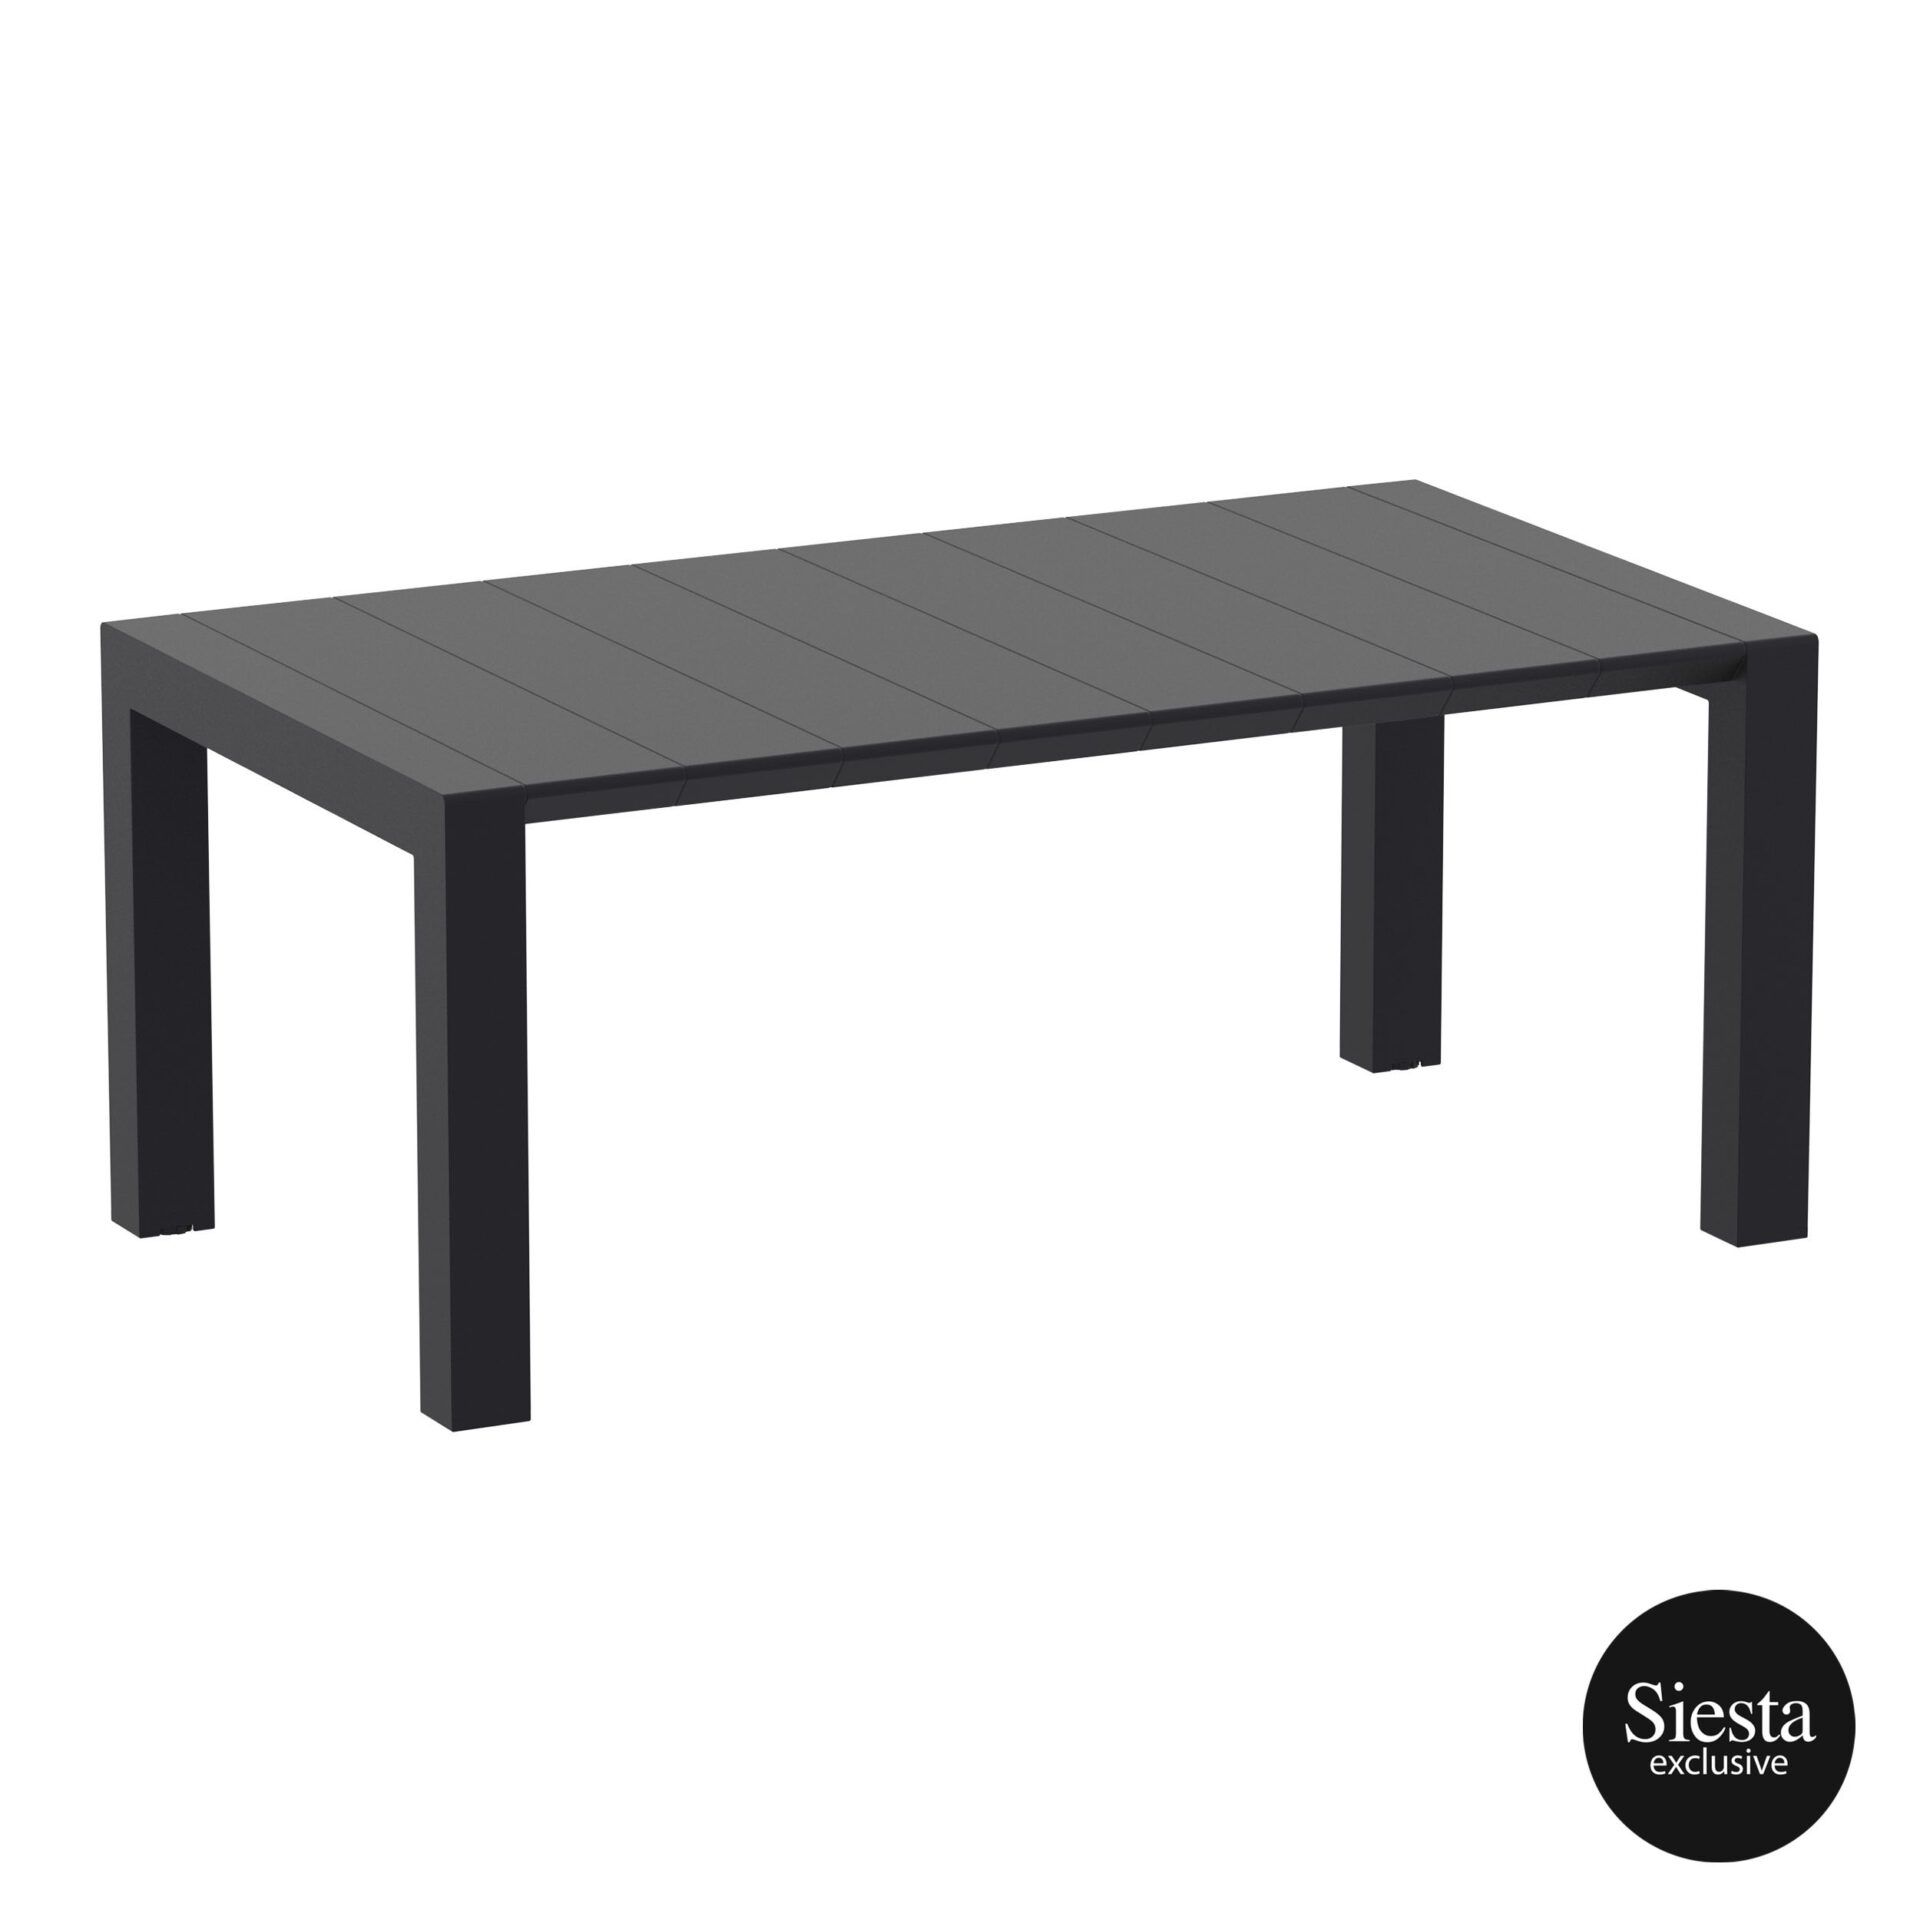 001 vegas table medium 180 black front side